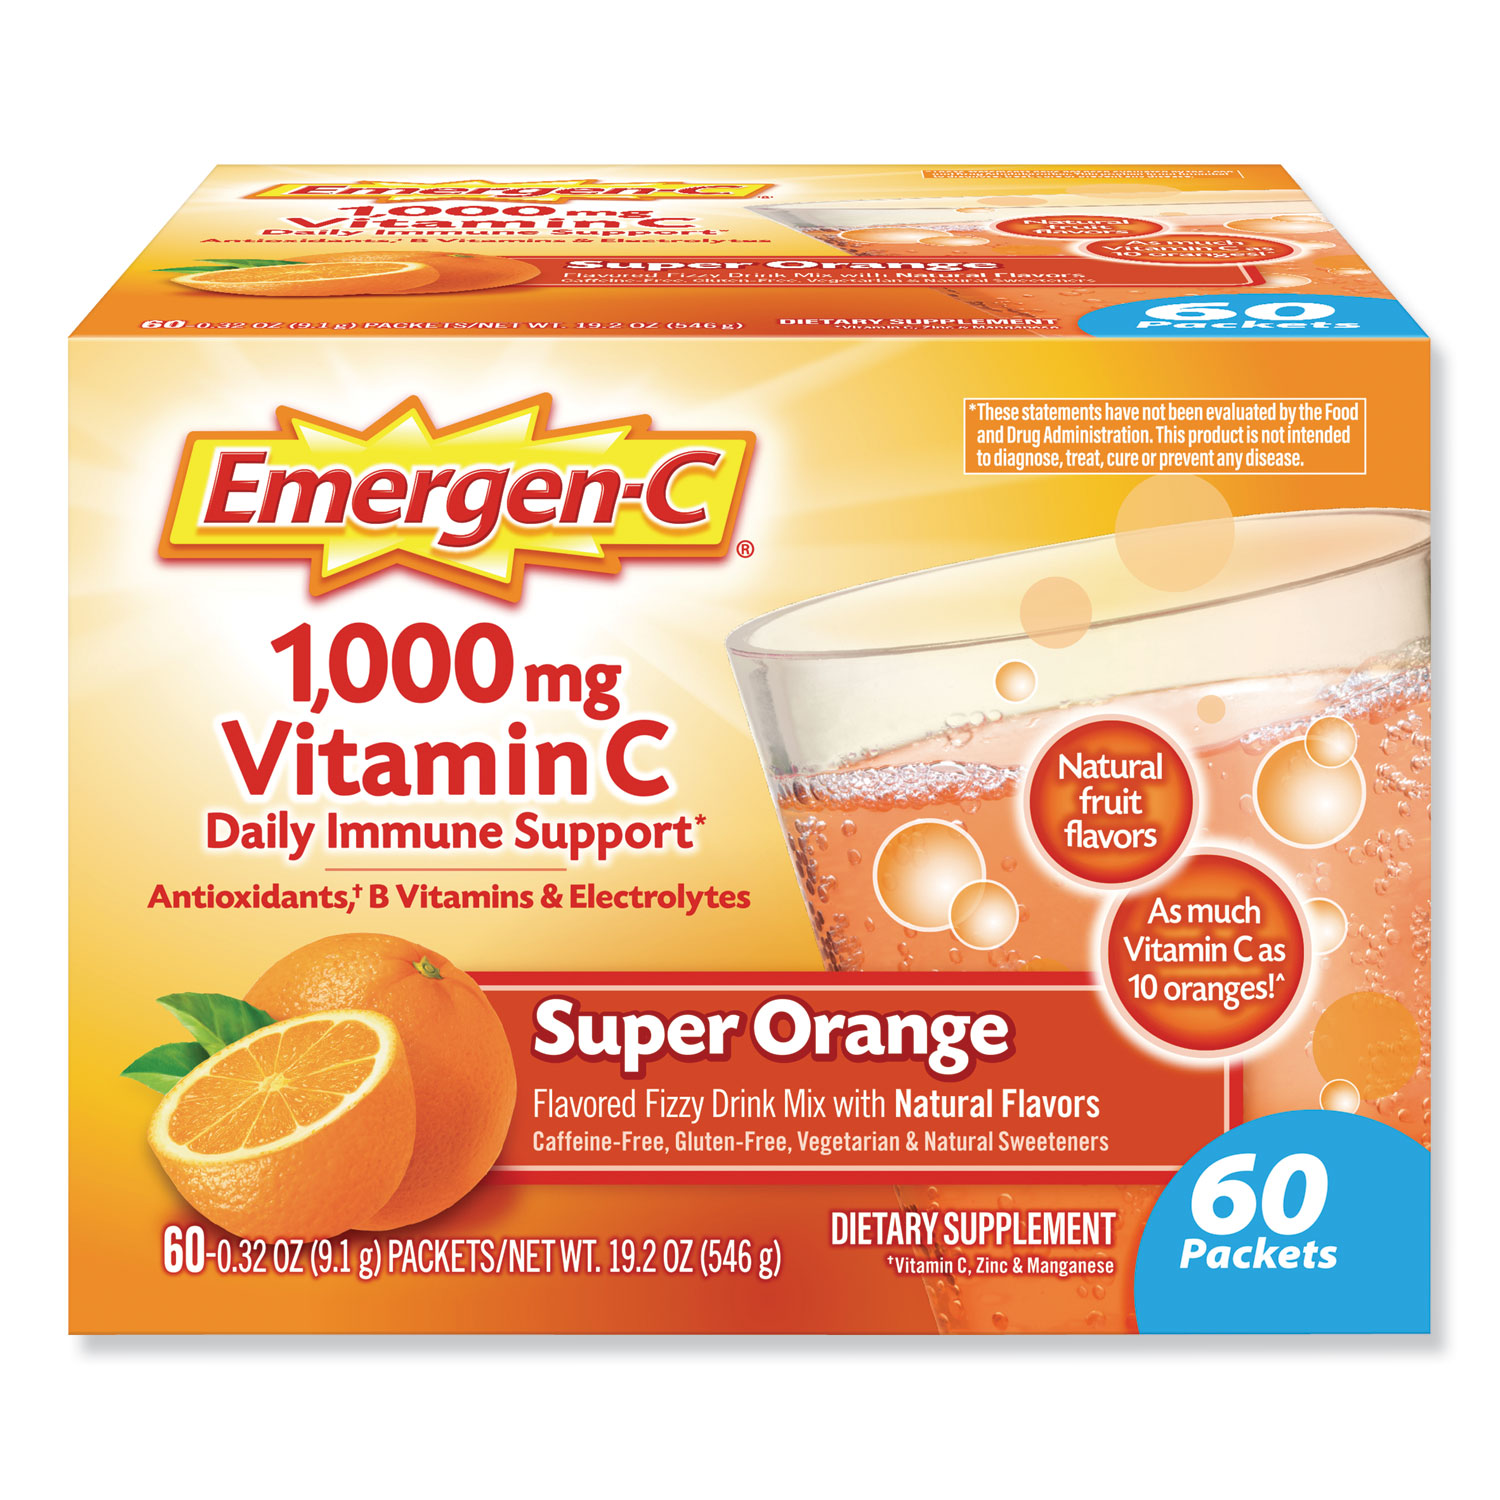  Emergen-C 130213 Immune Defense Drink Mix, Original Formula, Super Orange, 0.32 oz Packet, 60/Pack (ALA130213) 